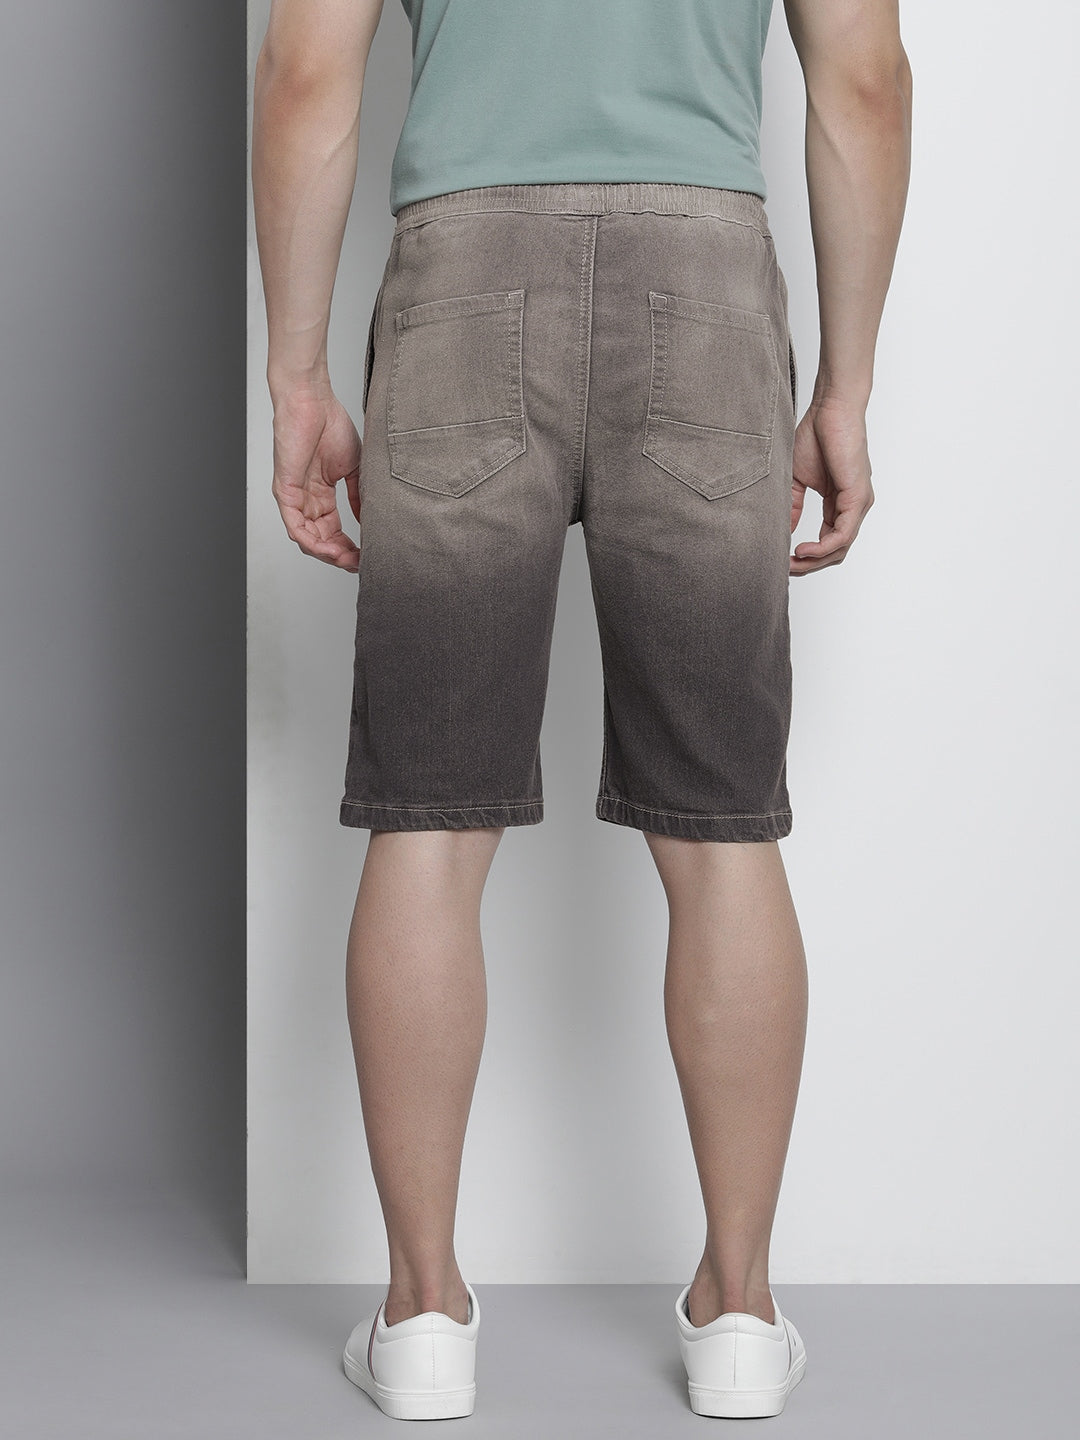 Shop Men Denim Shorts Online.